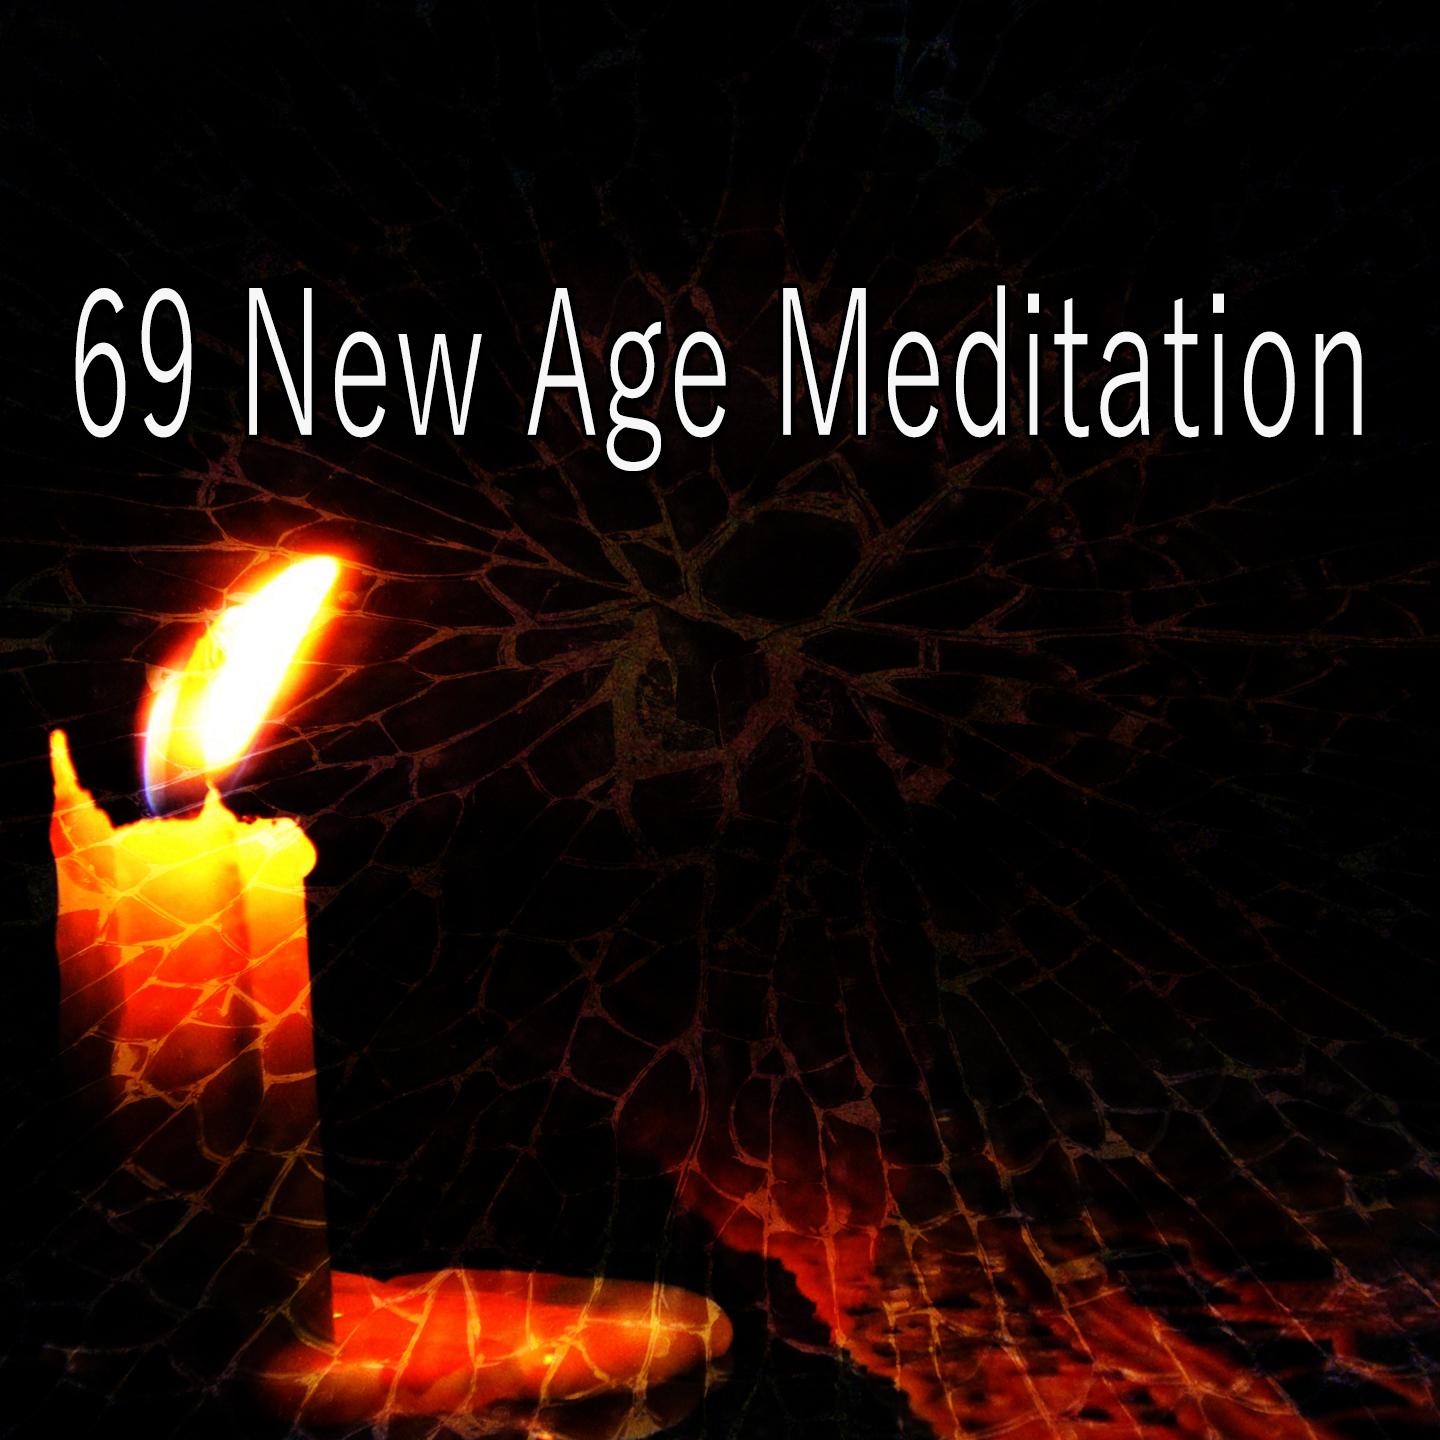 69 New Age Meditation